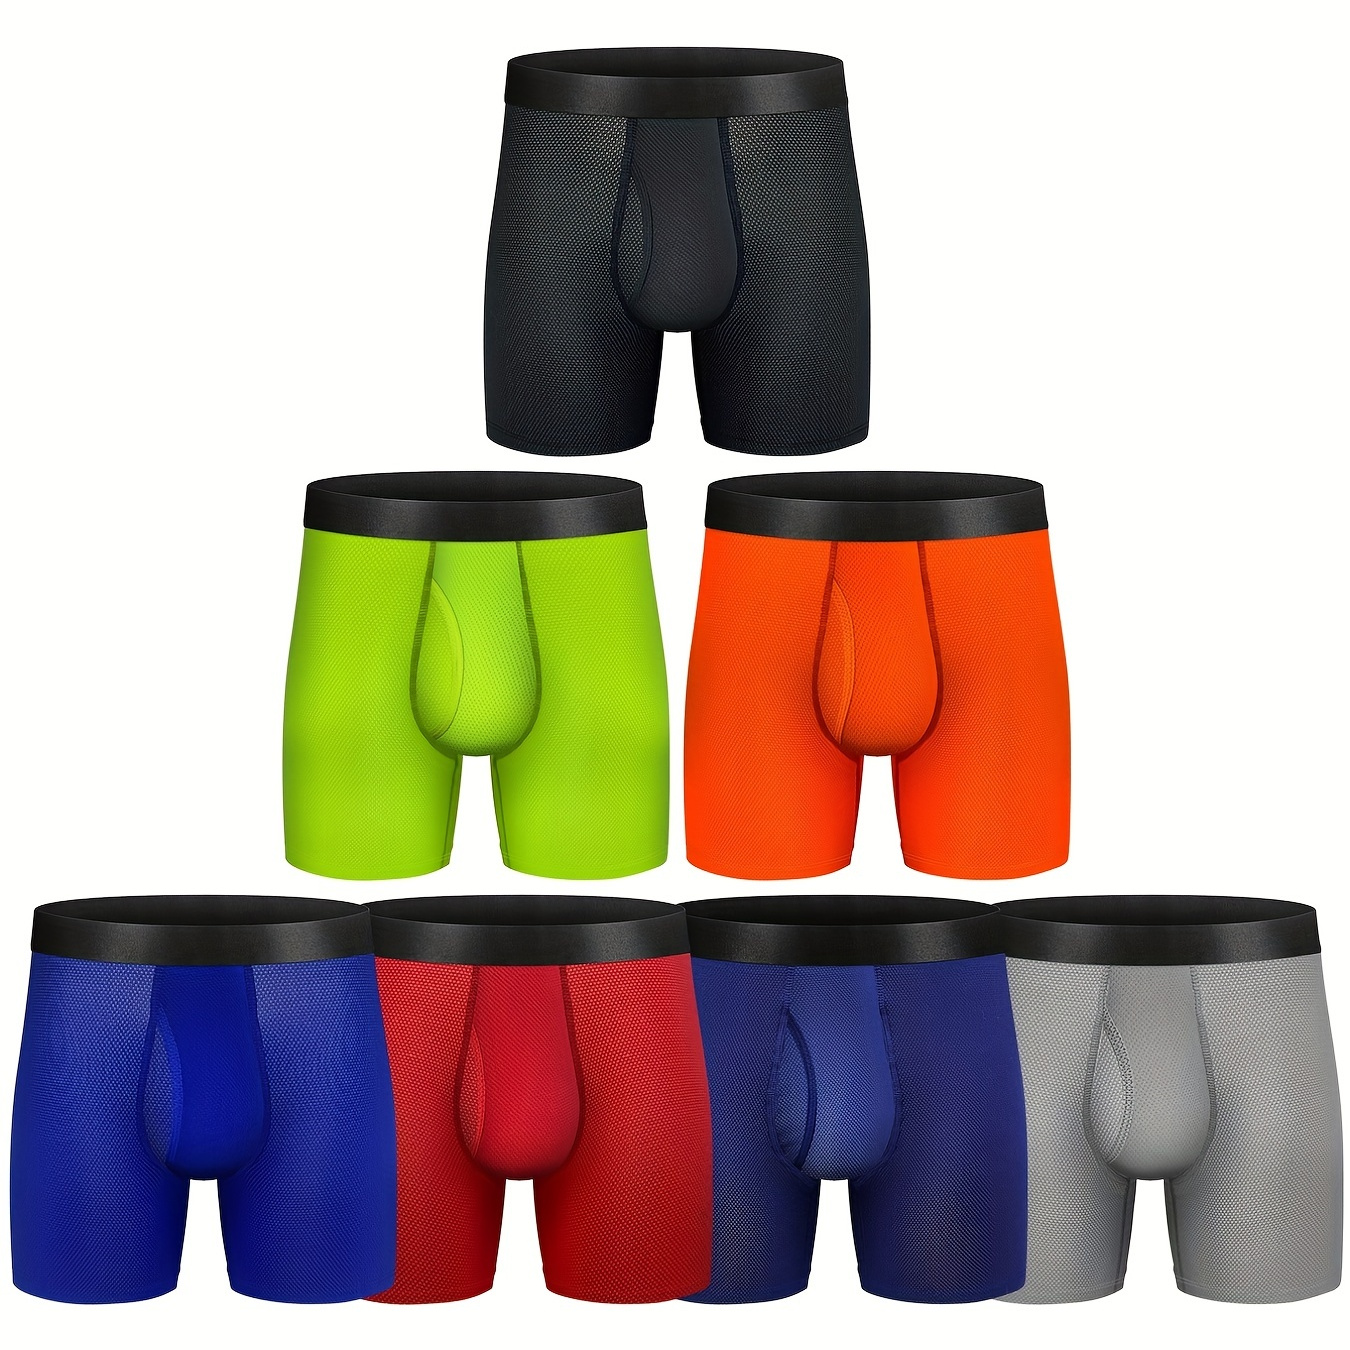 

7pcs Men's Casual Long Leg Boxers Briefs, Quick Drying Stretchy Athletic Sport Underwear, Soft Comfortable Breathable Underwear, Multi-color Sets